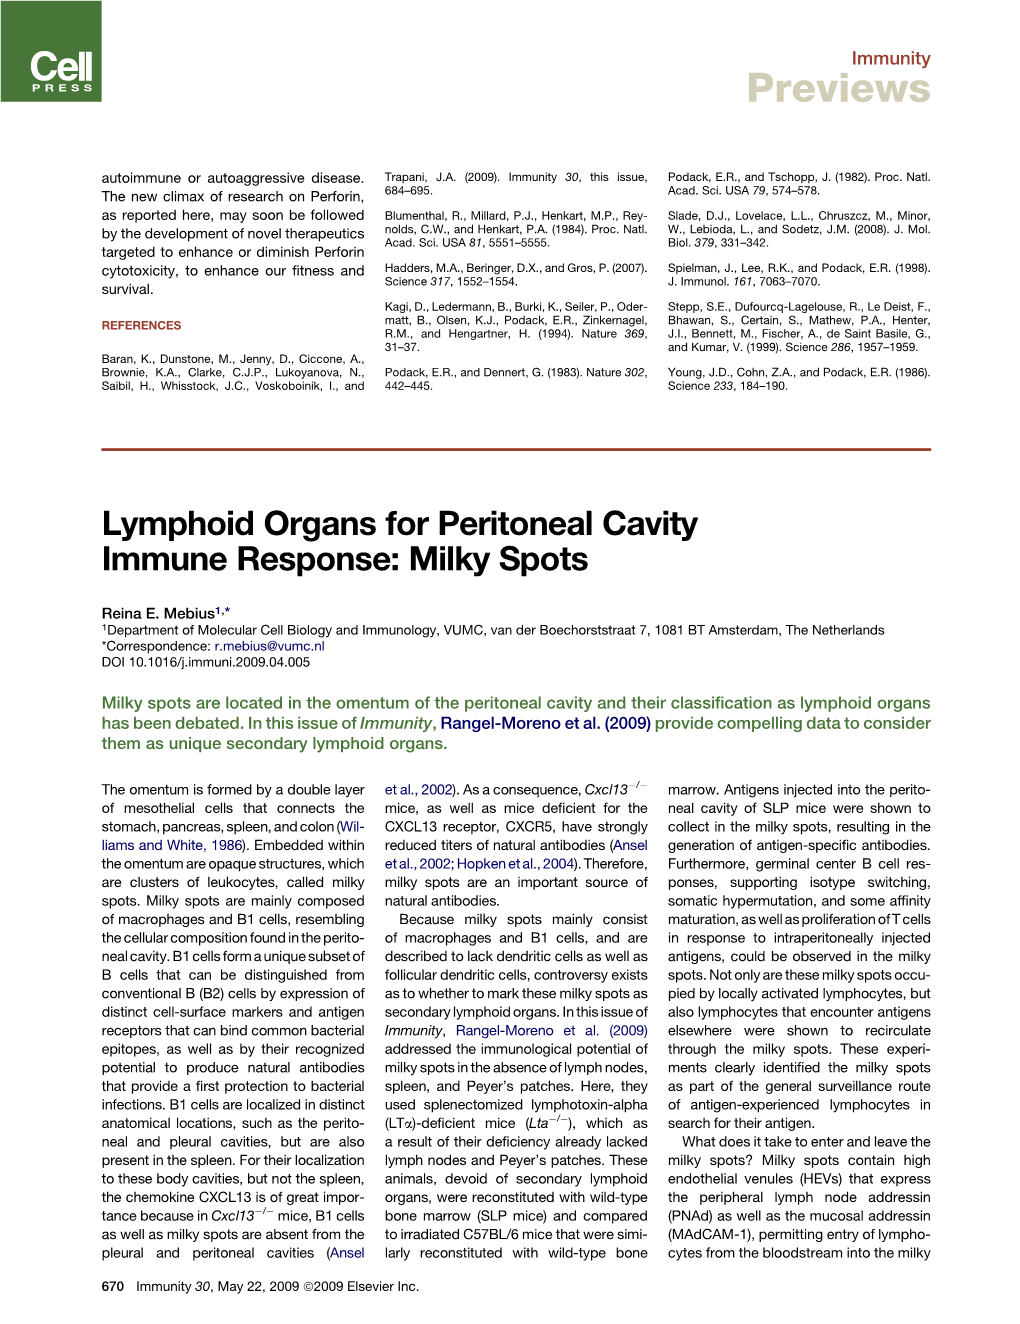 Lymphoid Organs for Peritoneal Cavity Immune Response: Milky Spots